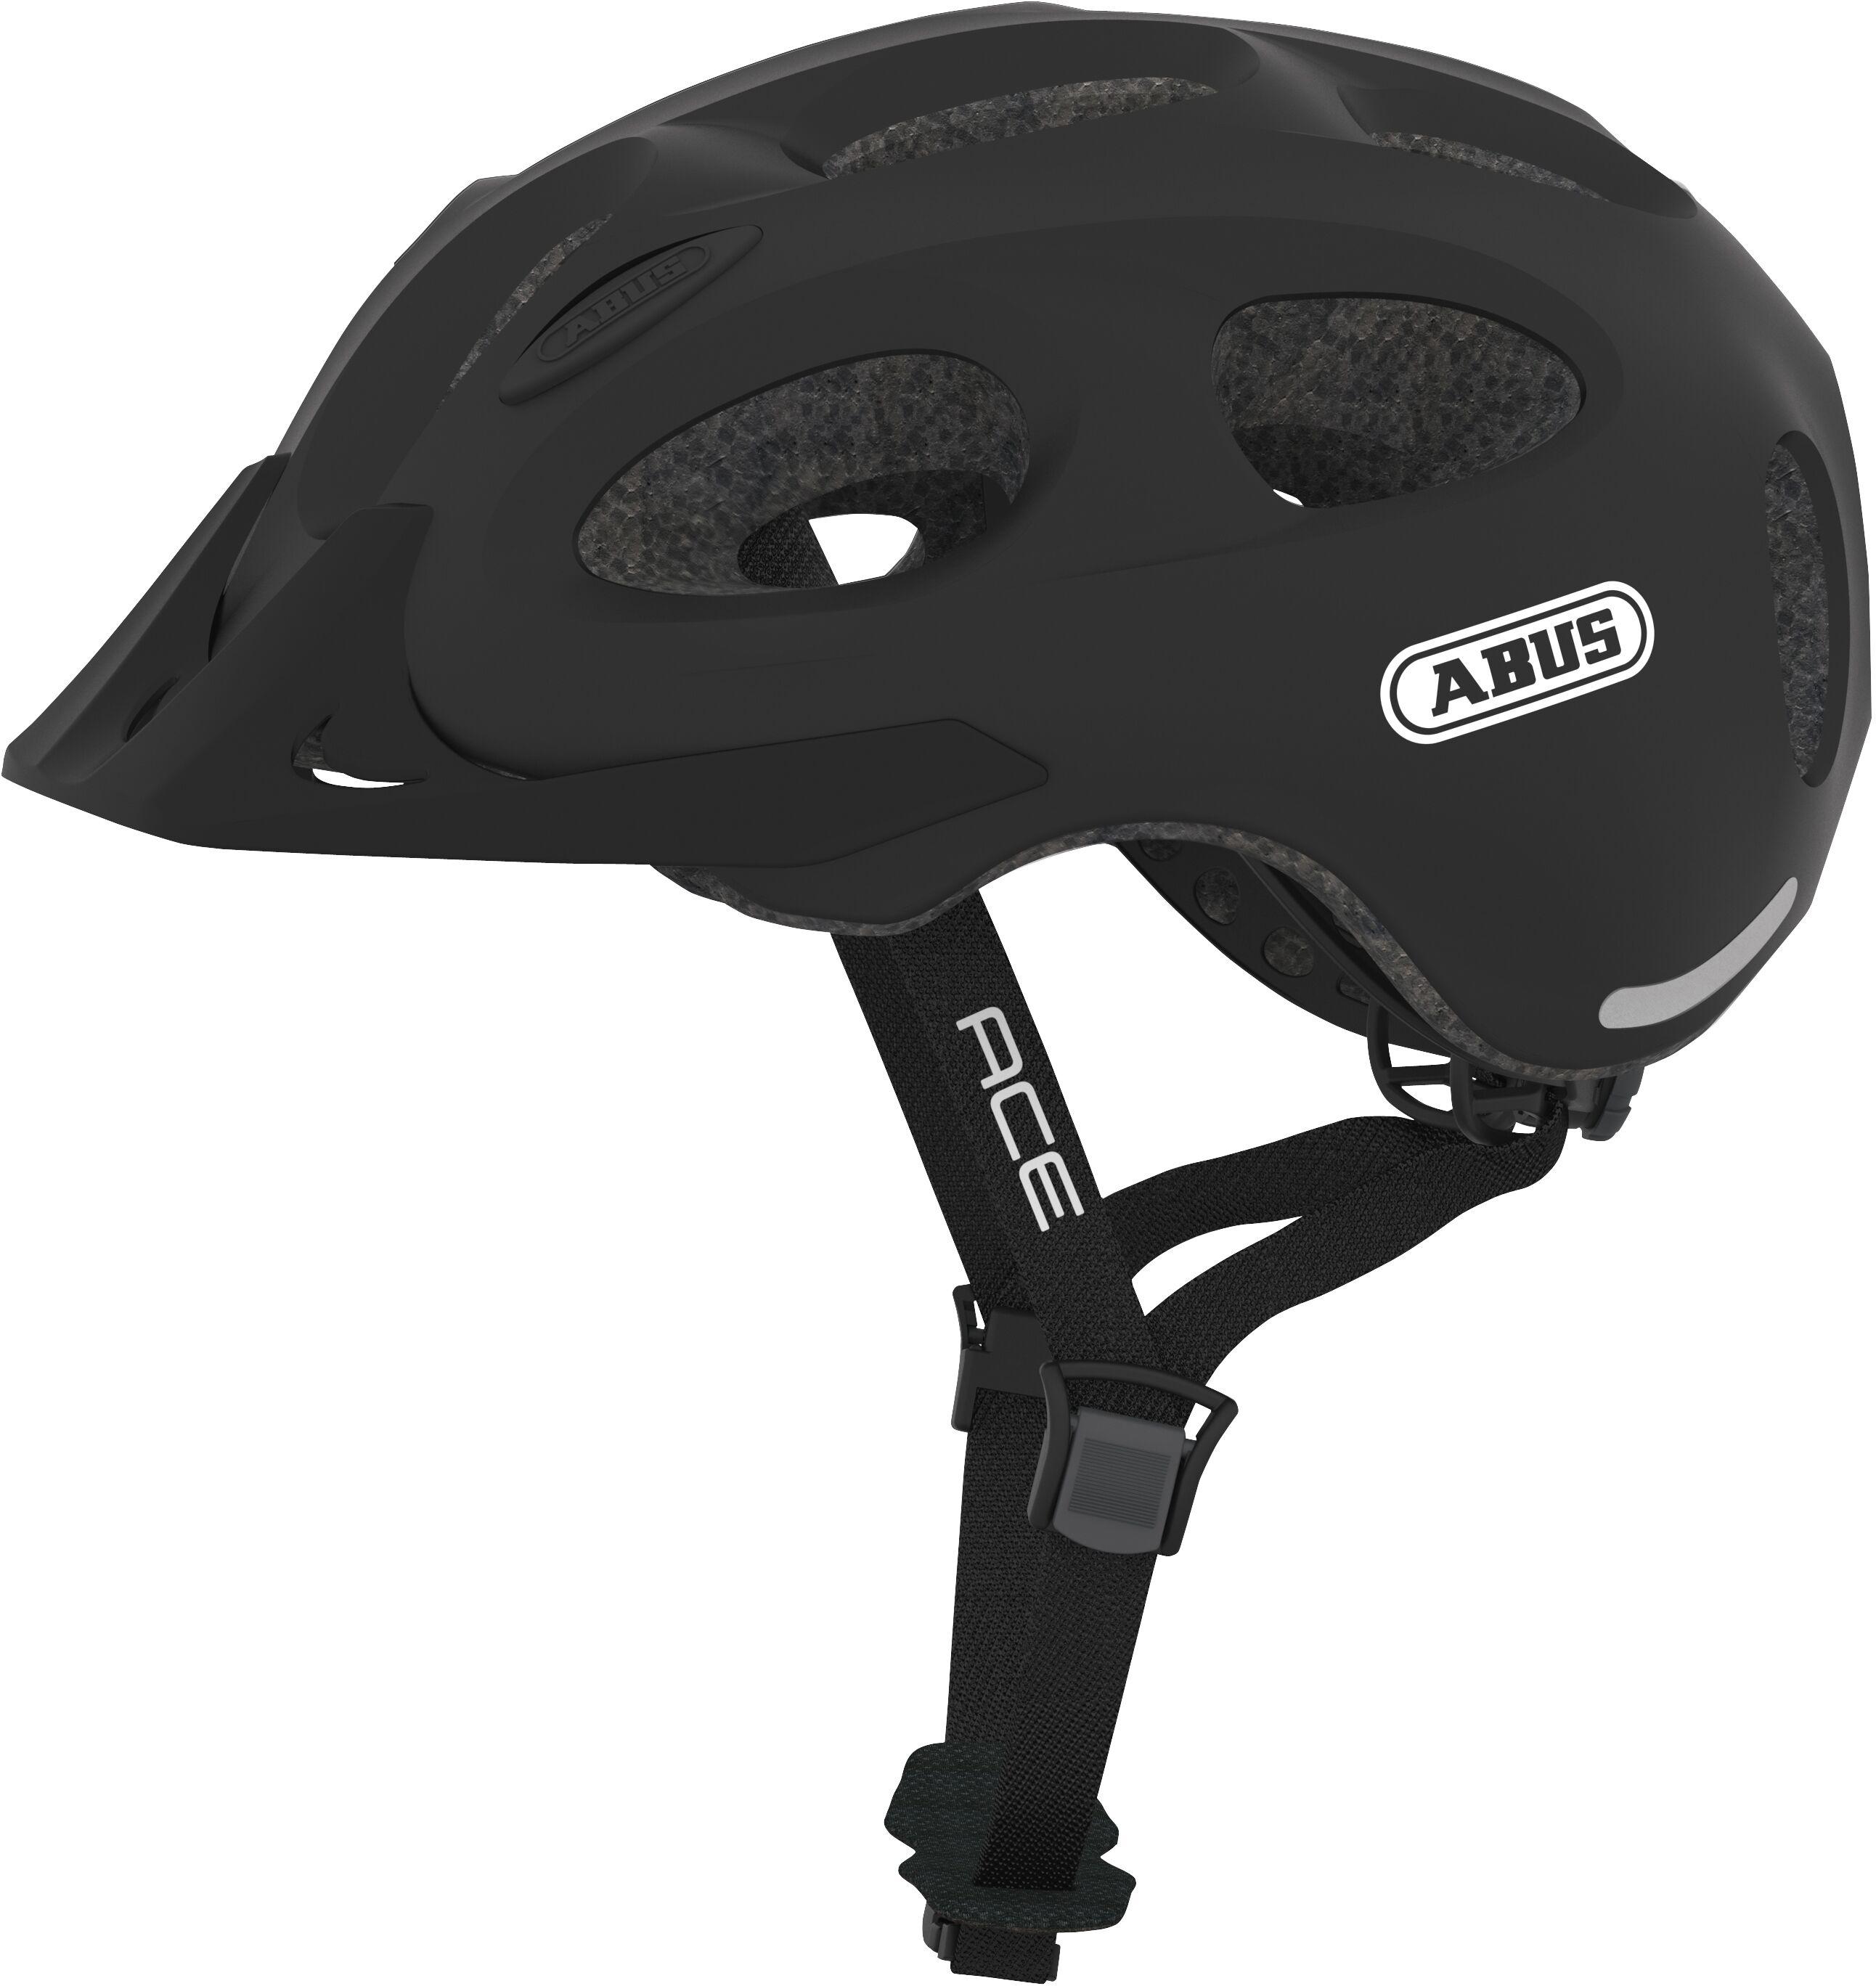 Abus Helmet Youn-I Ace Black M 52-57Cm